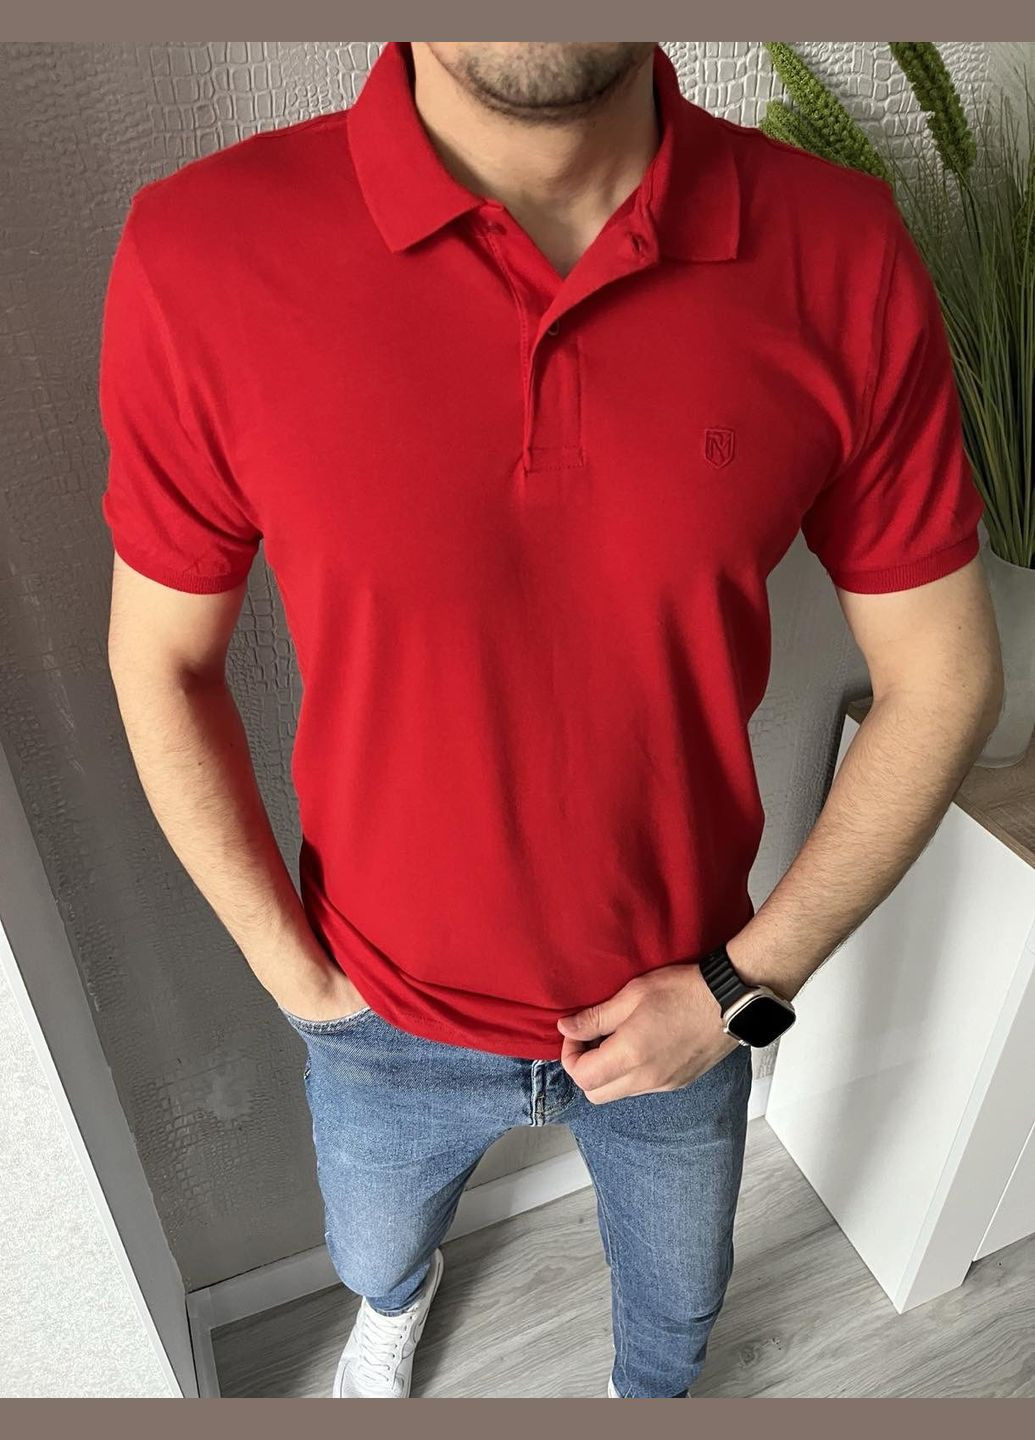 Красная футболка-футболка поло мужская для мужчин No Brand однотонная